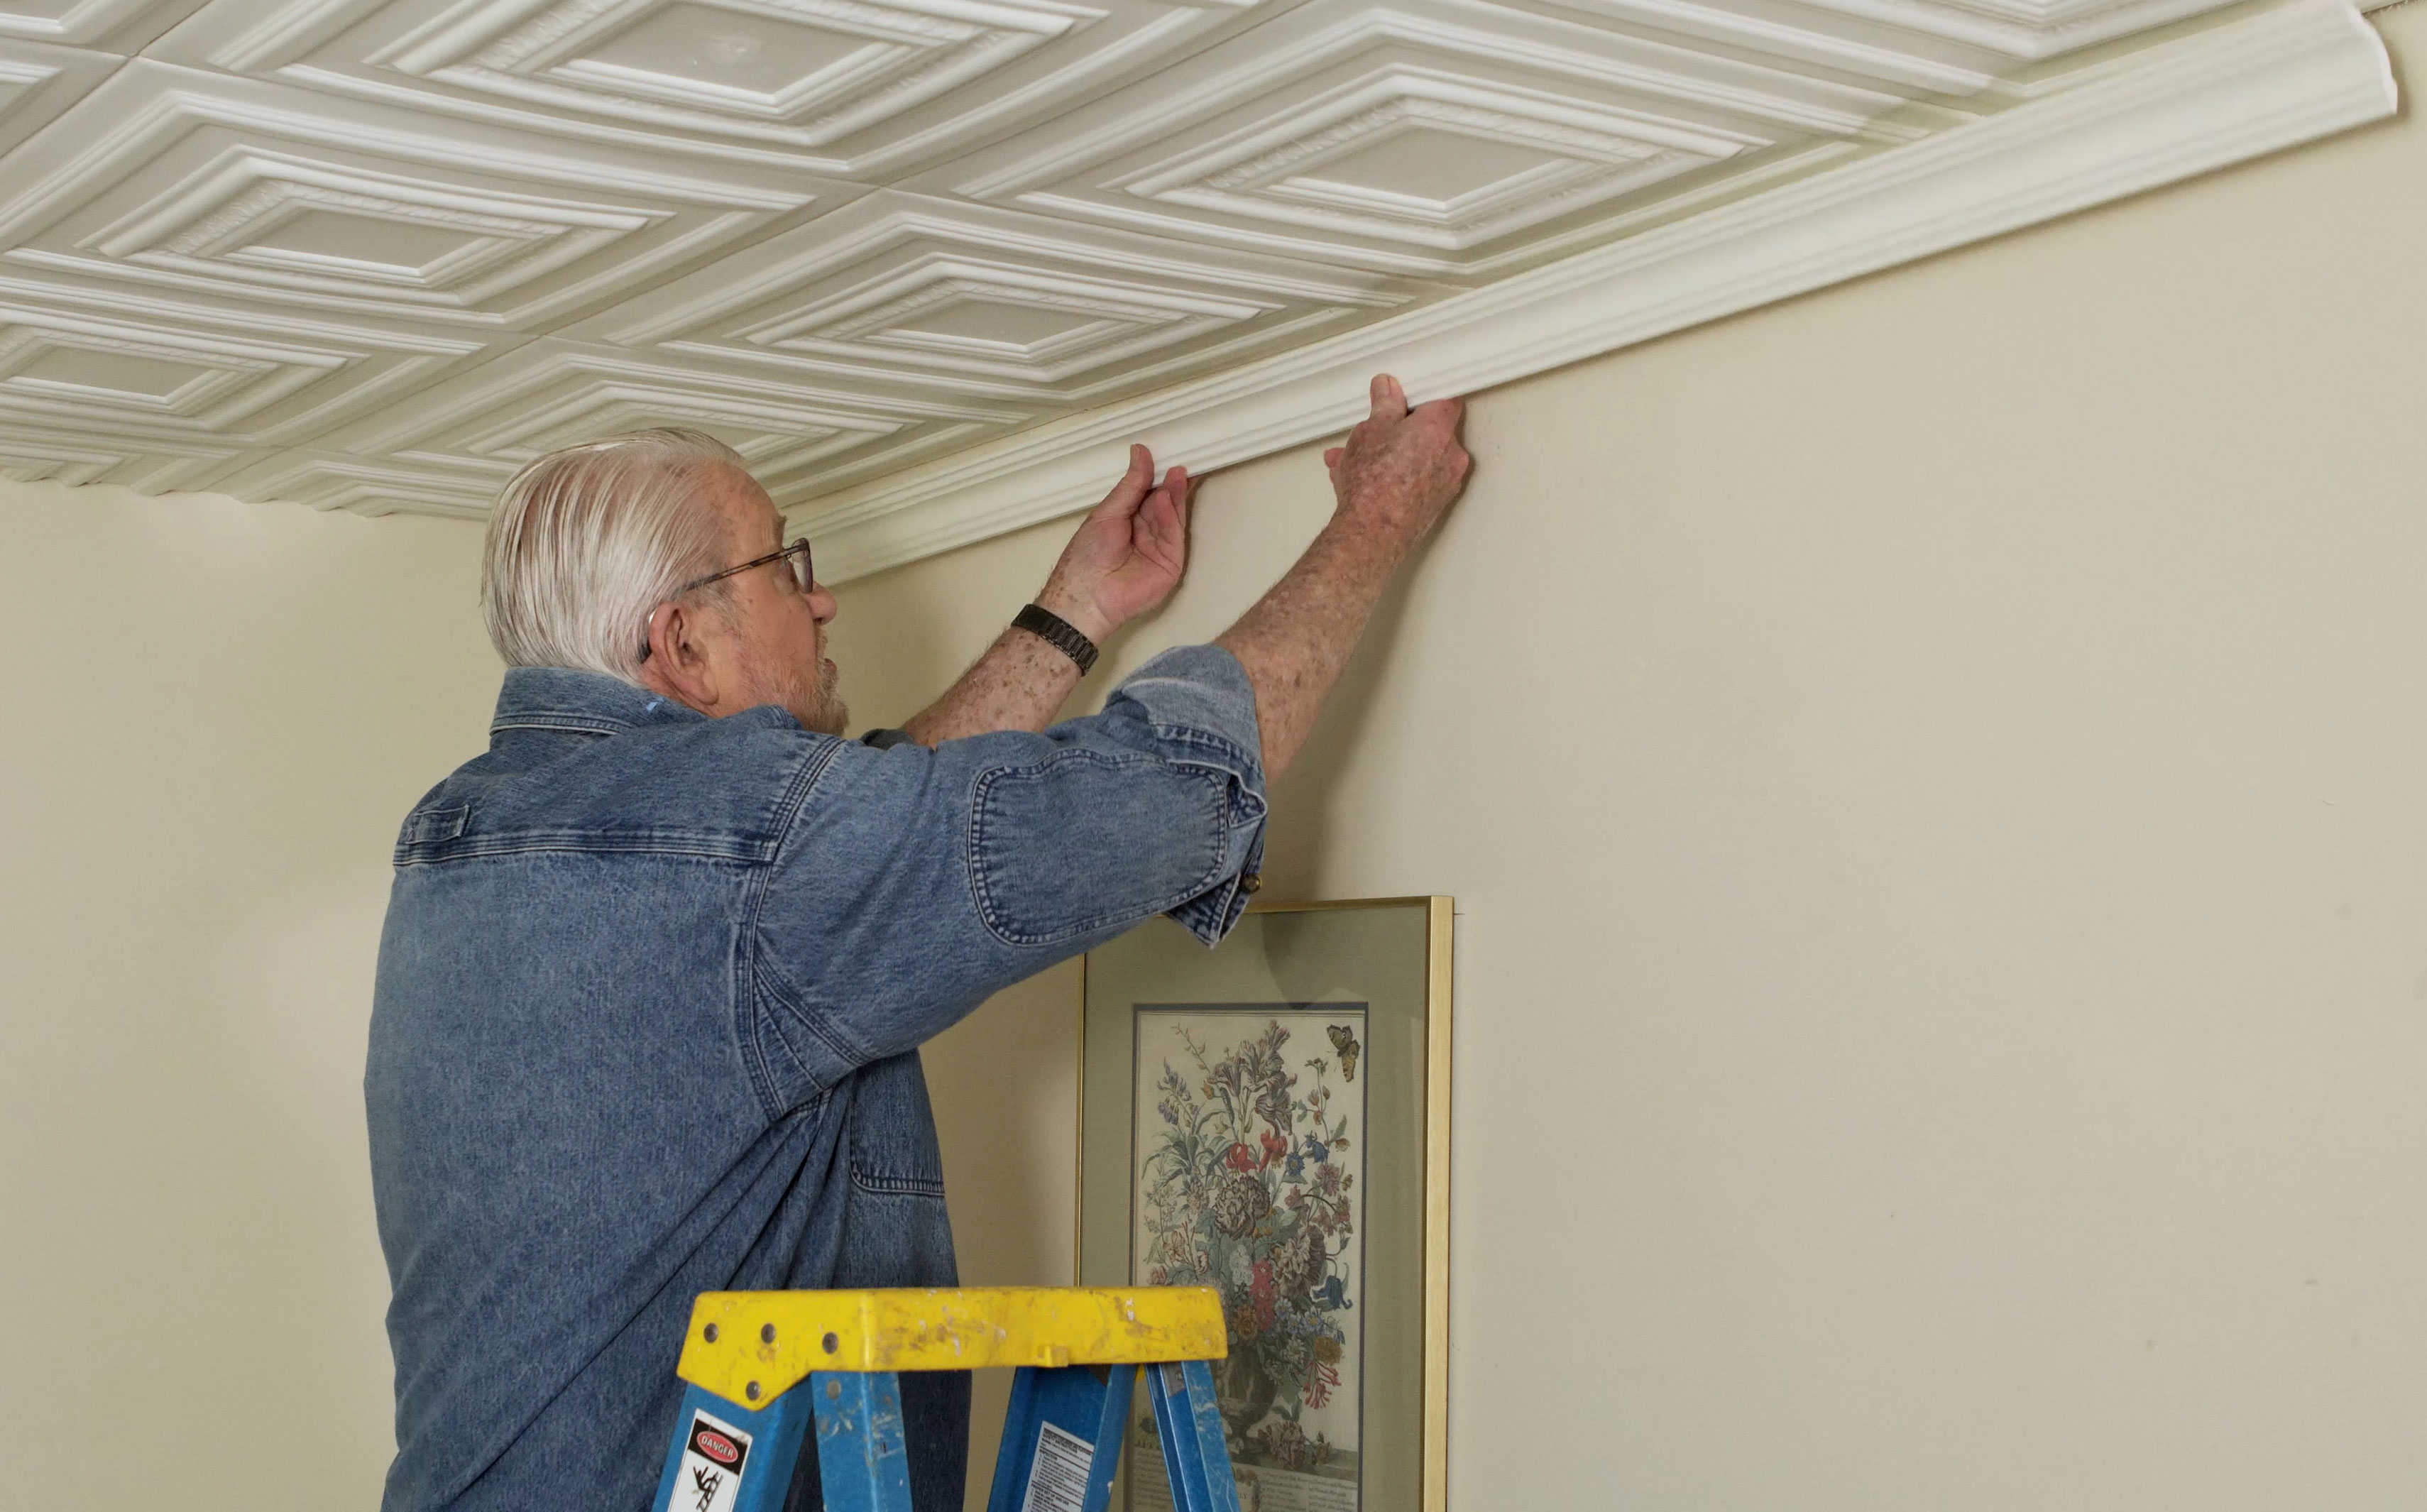 Man installing crown molding on foam tile ceiling 